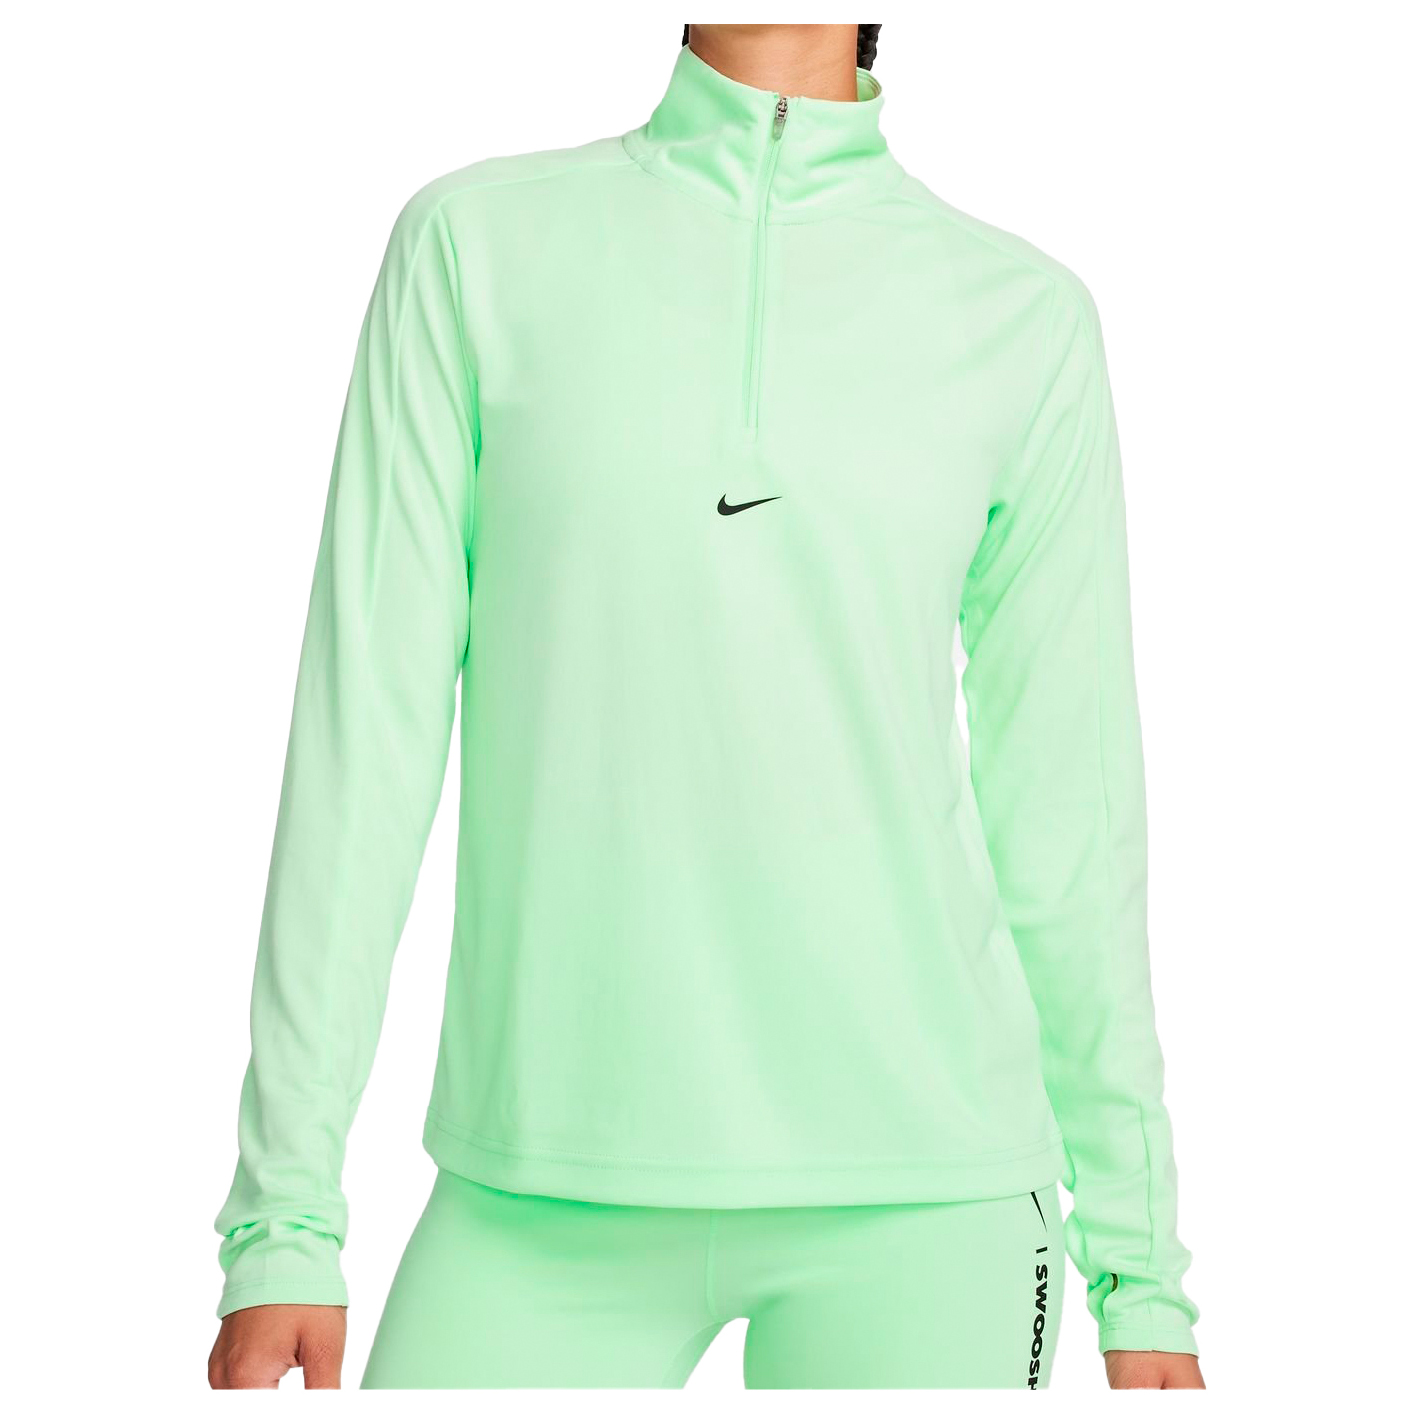 Функциональная рубашка Nike Women's Dri FIT Pacer Half Zip, цвет Vapor Green/Black шорты nike women s one dri fit high rise short цвет vapor green black